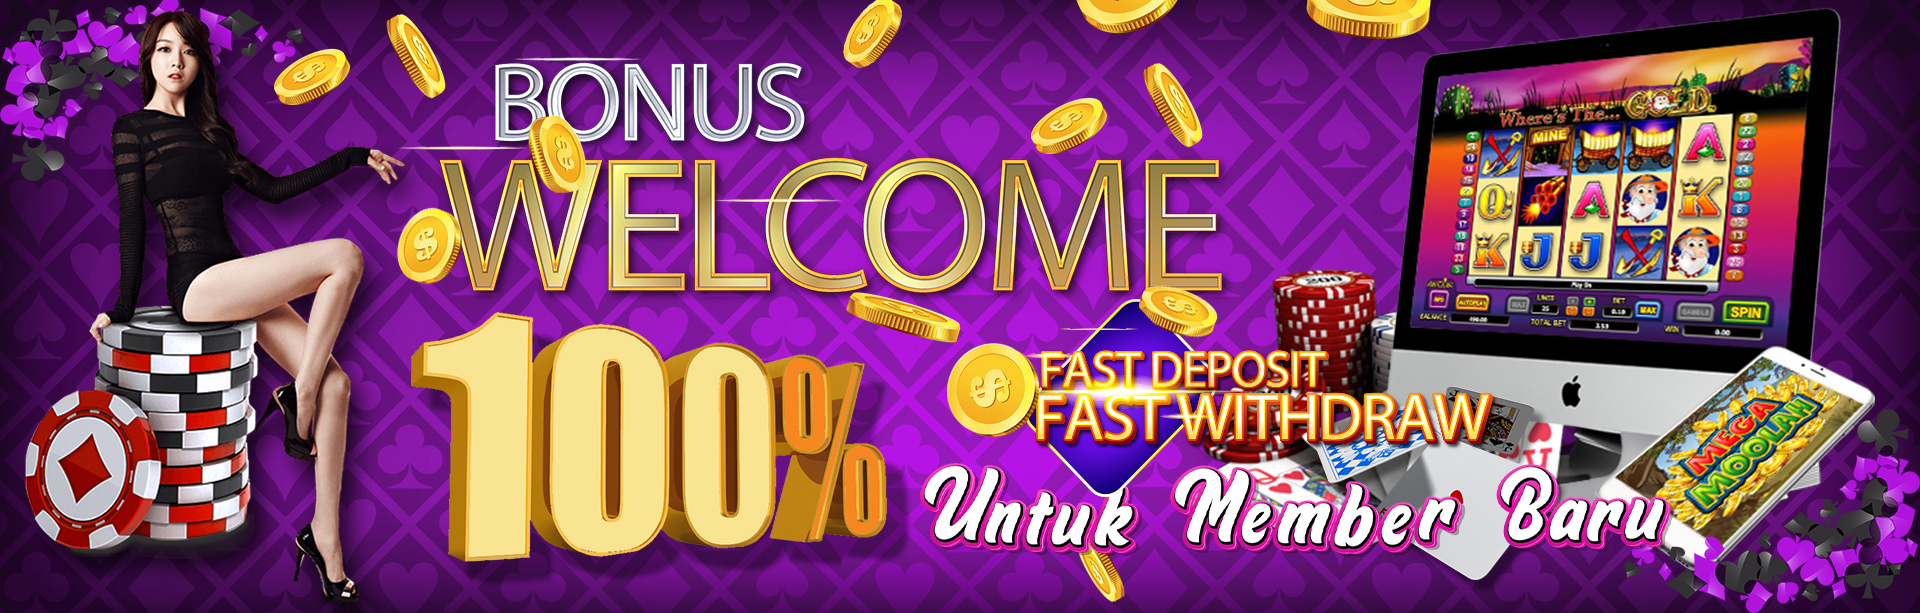 Bonus Welcome